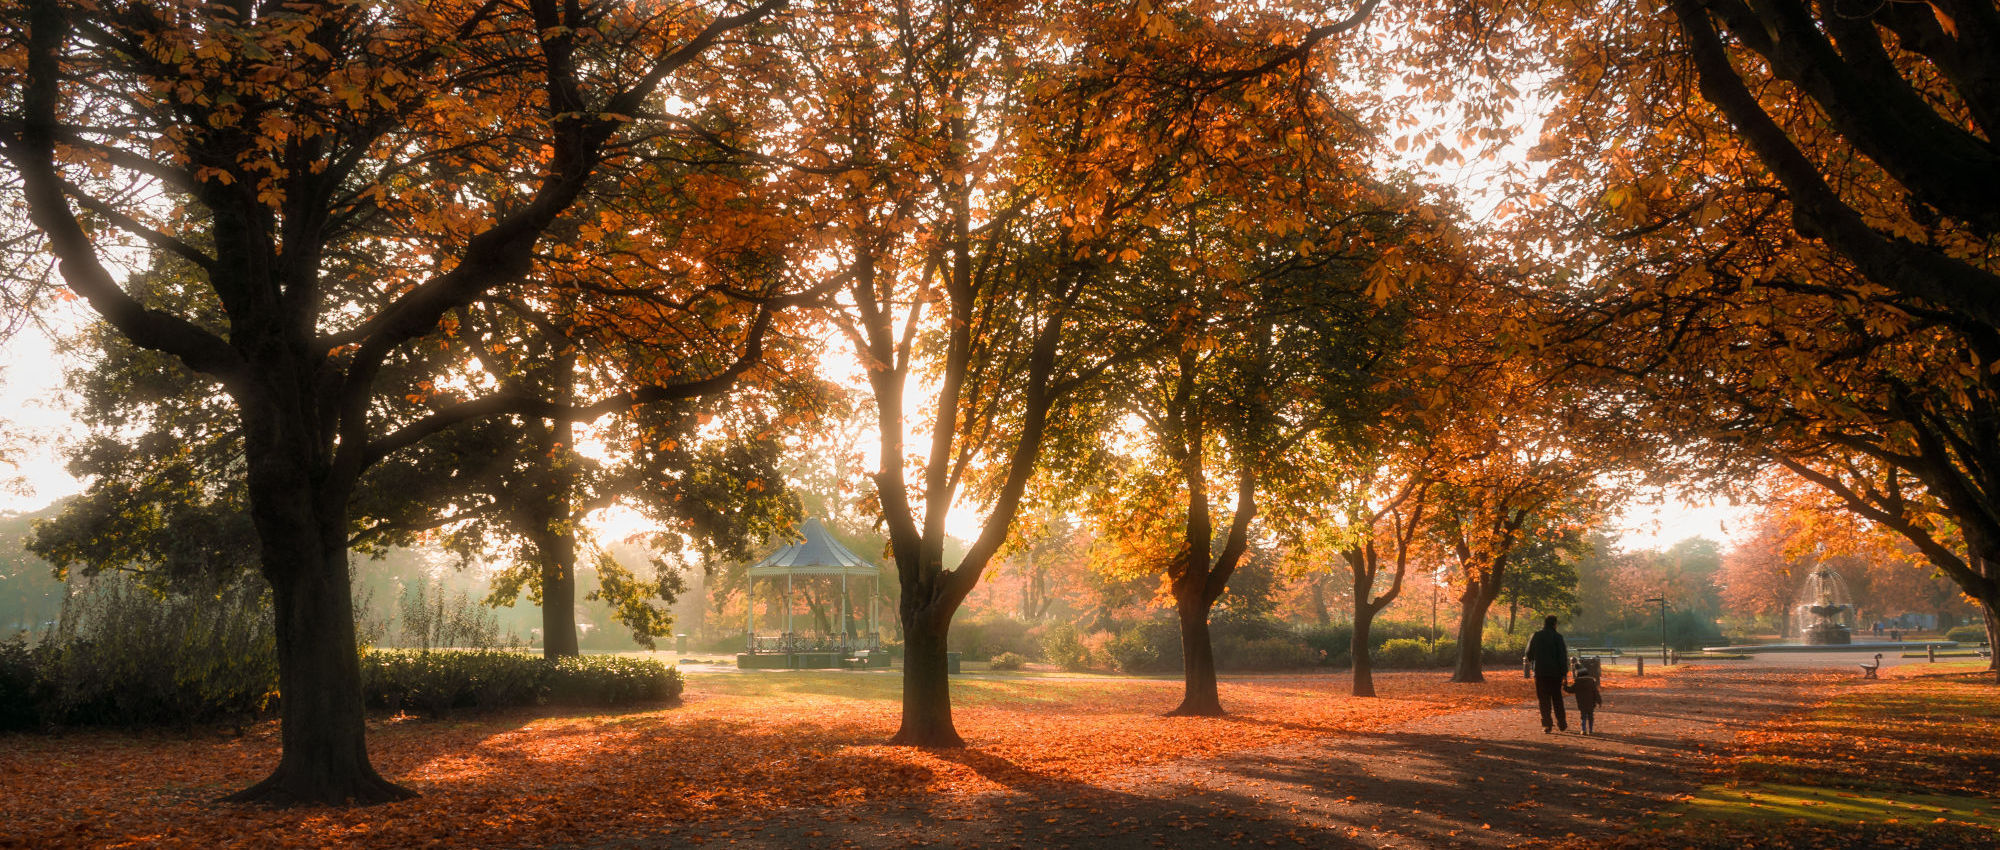 Albert Park in the autumn